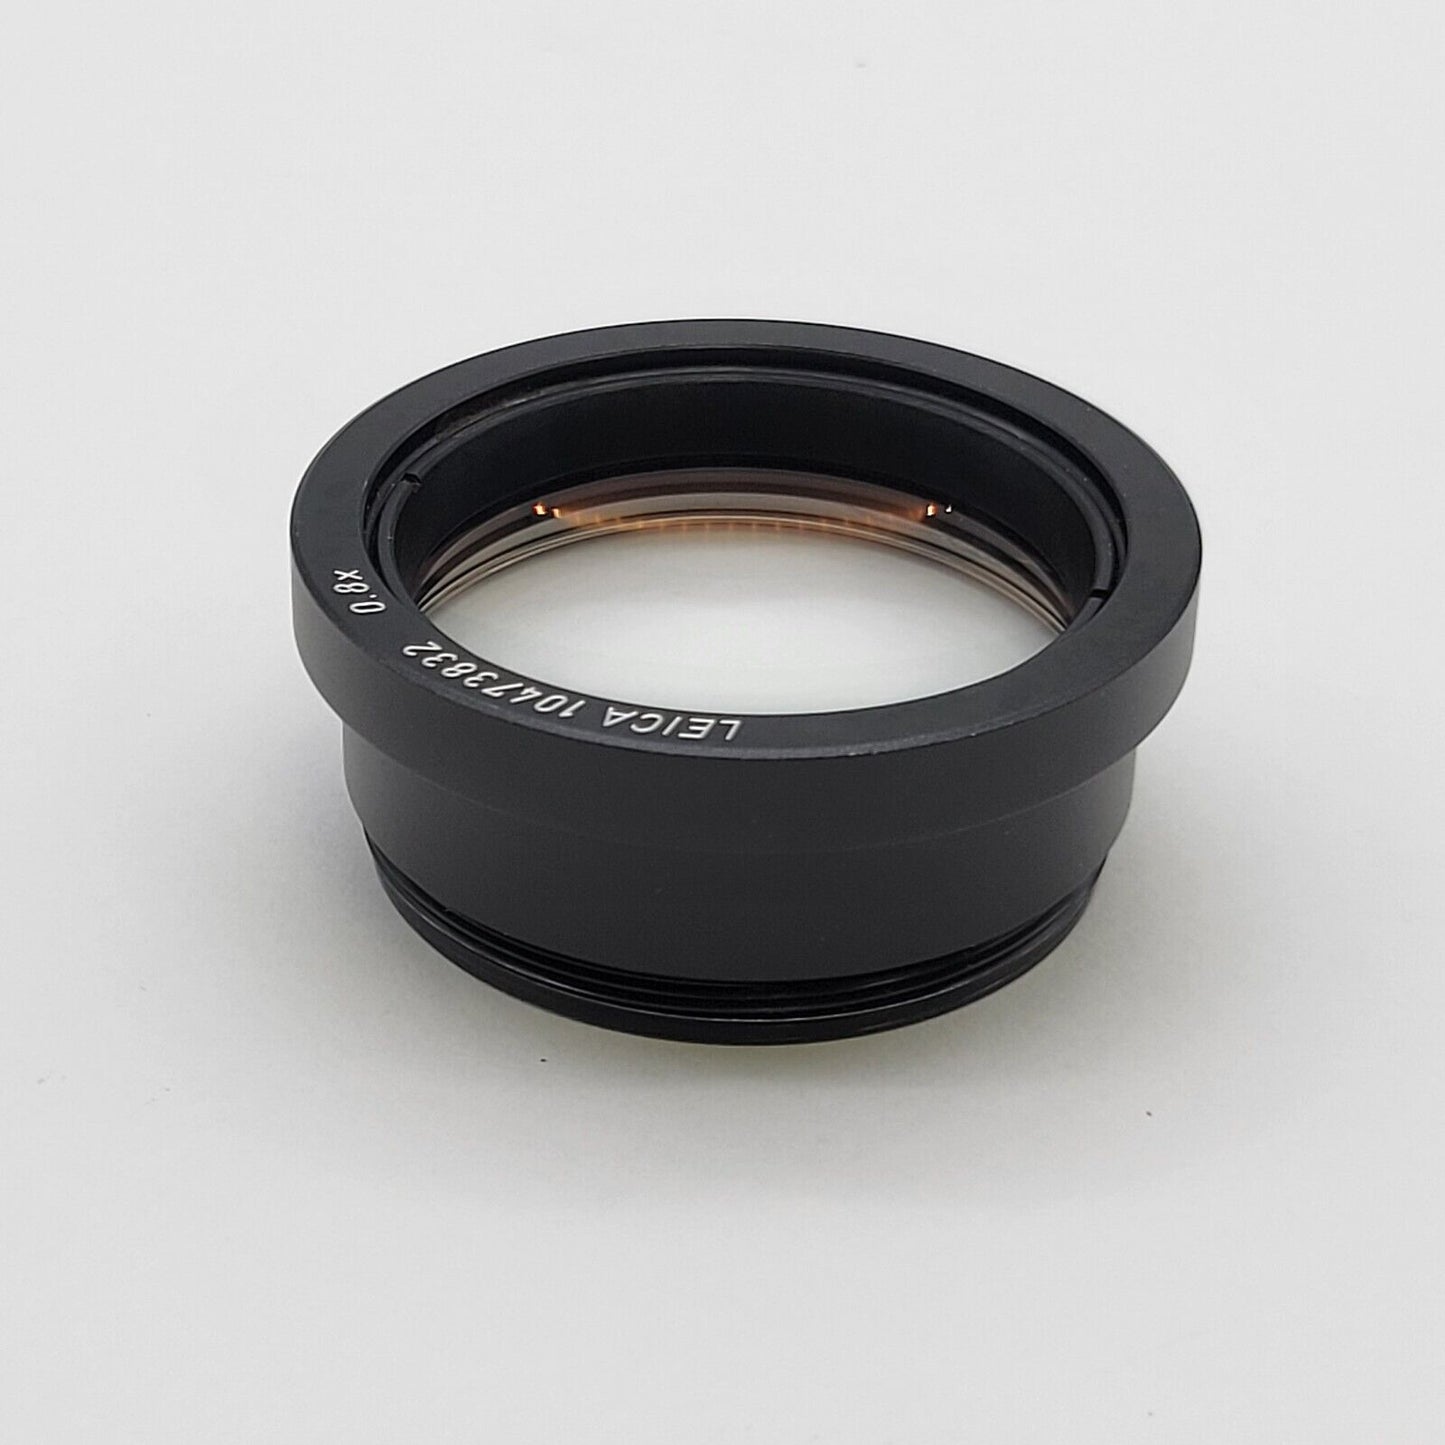 Leica Stereo Microscope Objective Lens 0.8x 10473832 - microscopemarketplace